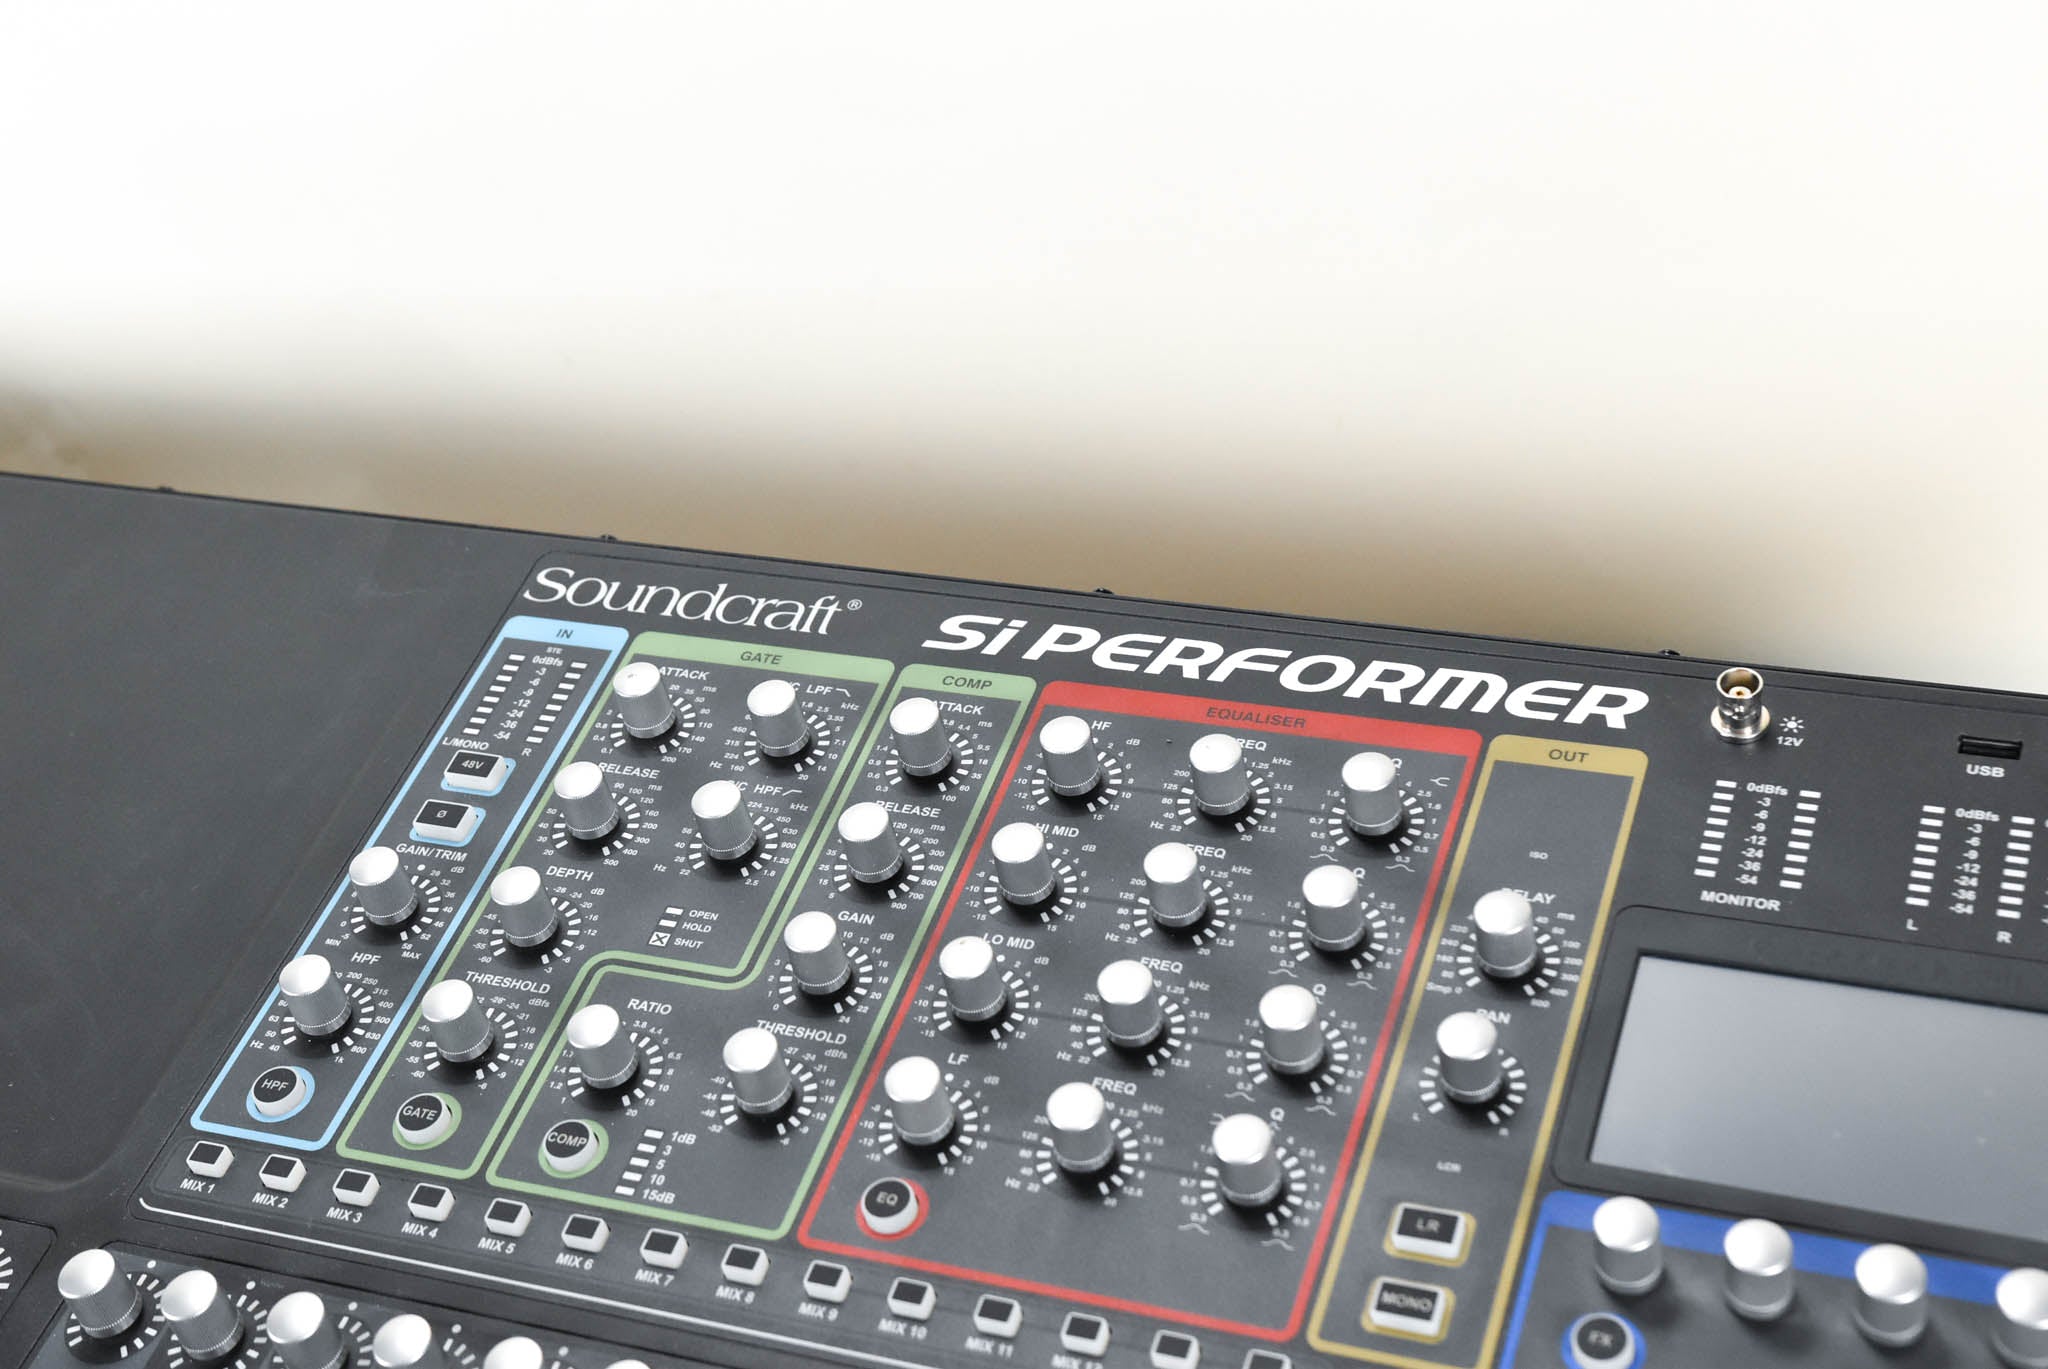 Soundcraft Si Performer 3 Digital Audio Mixer with DMX Control